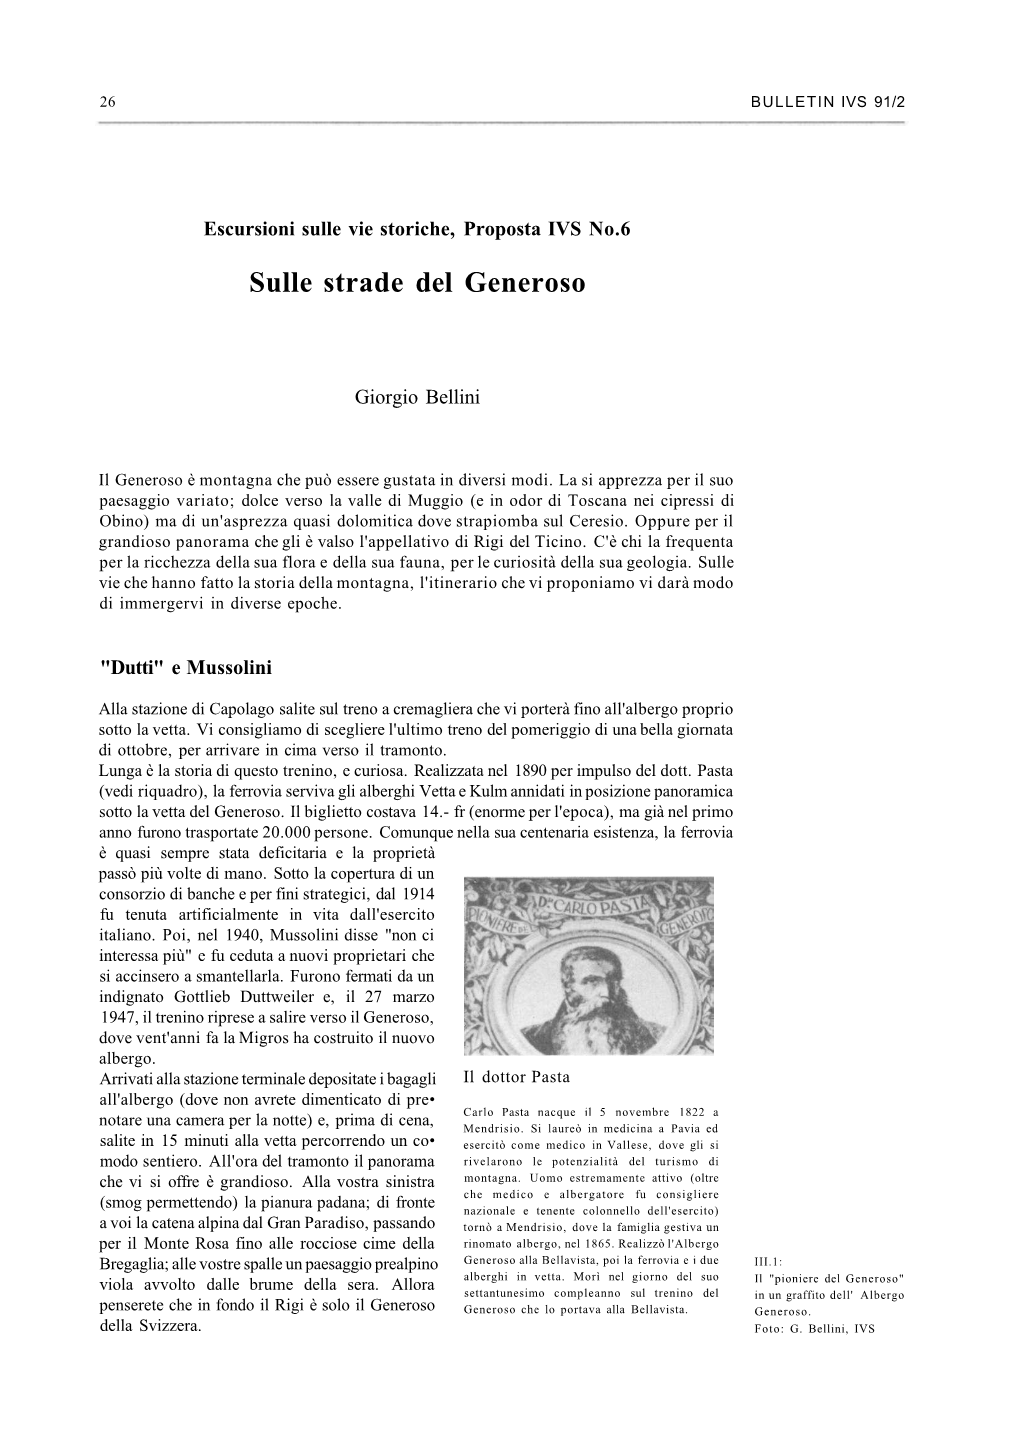 Vie Storiche E Generoso, in Bulletin IVS 91/2